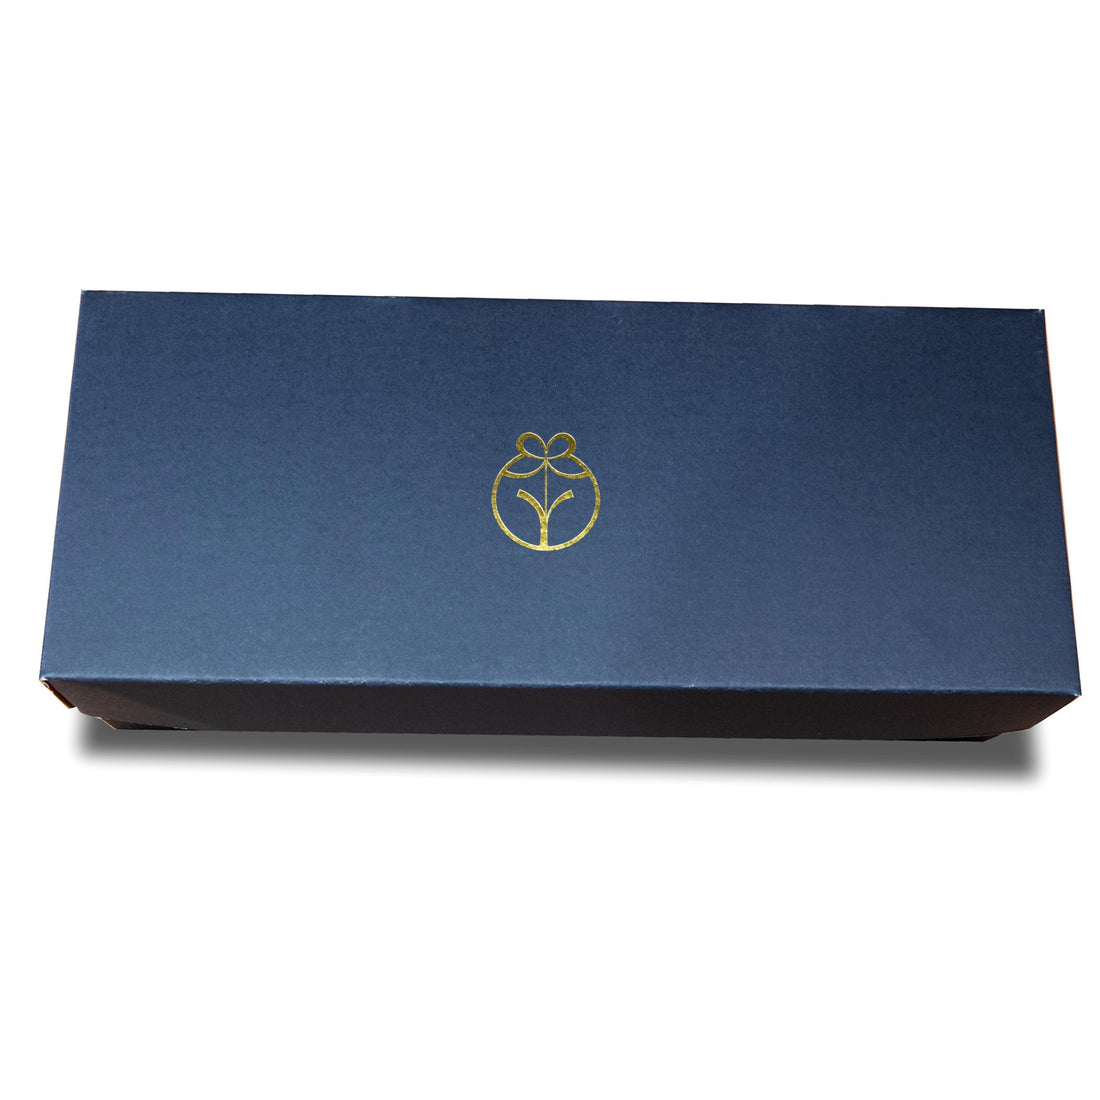 Premium Gift Box - FREE Satin Dust Bags & Custom Gift Card